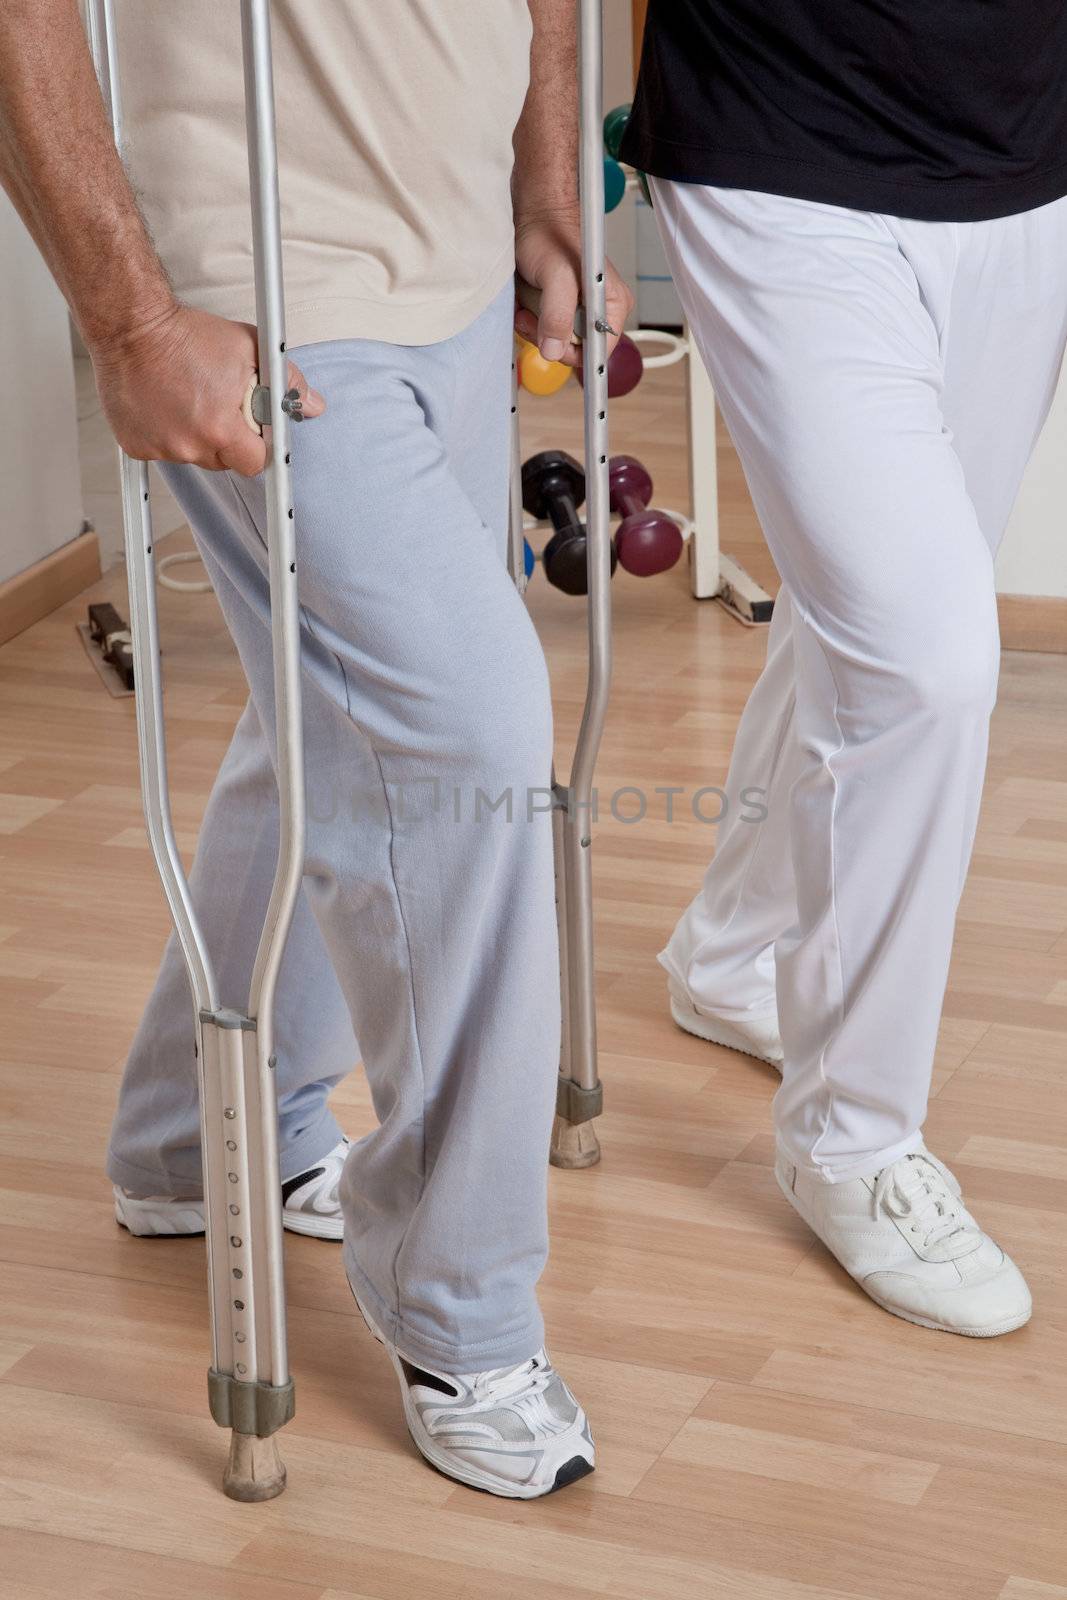 Patient on crutches discusses his progress.